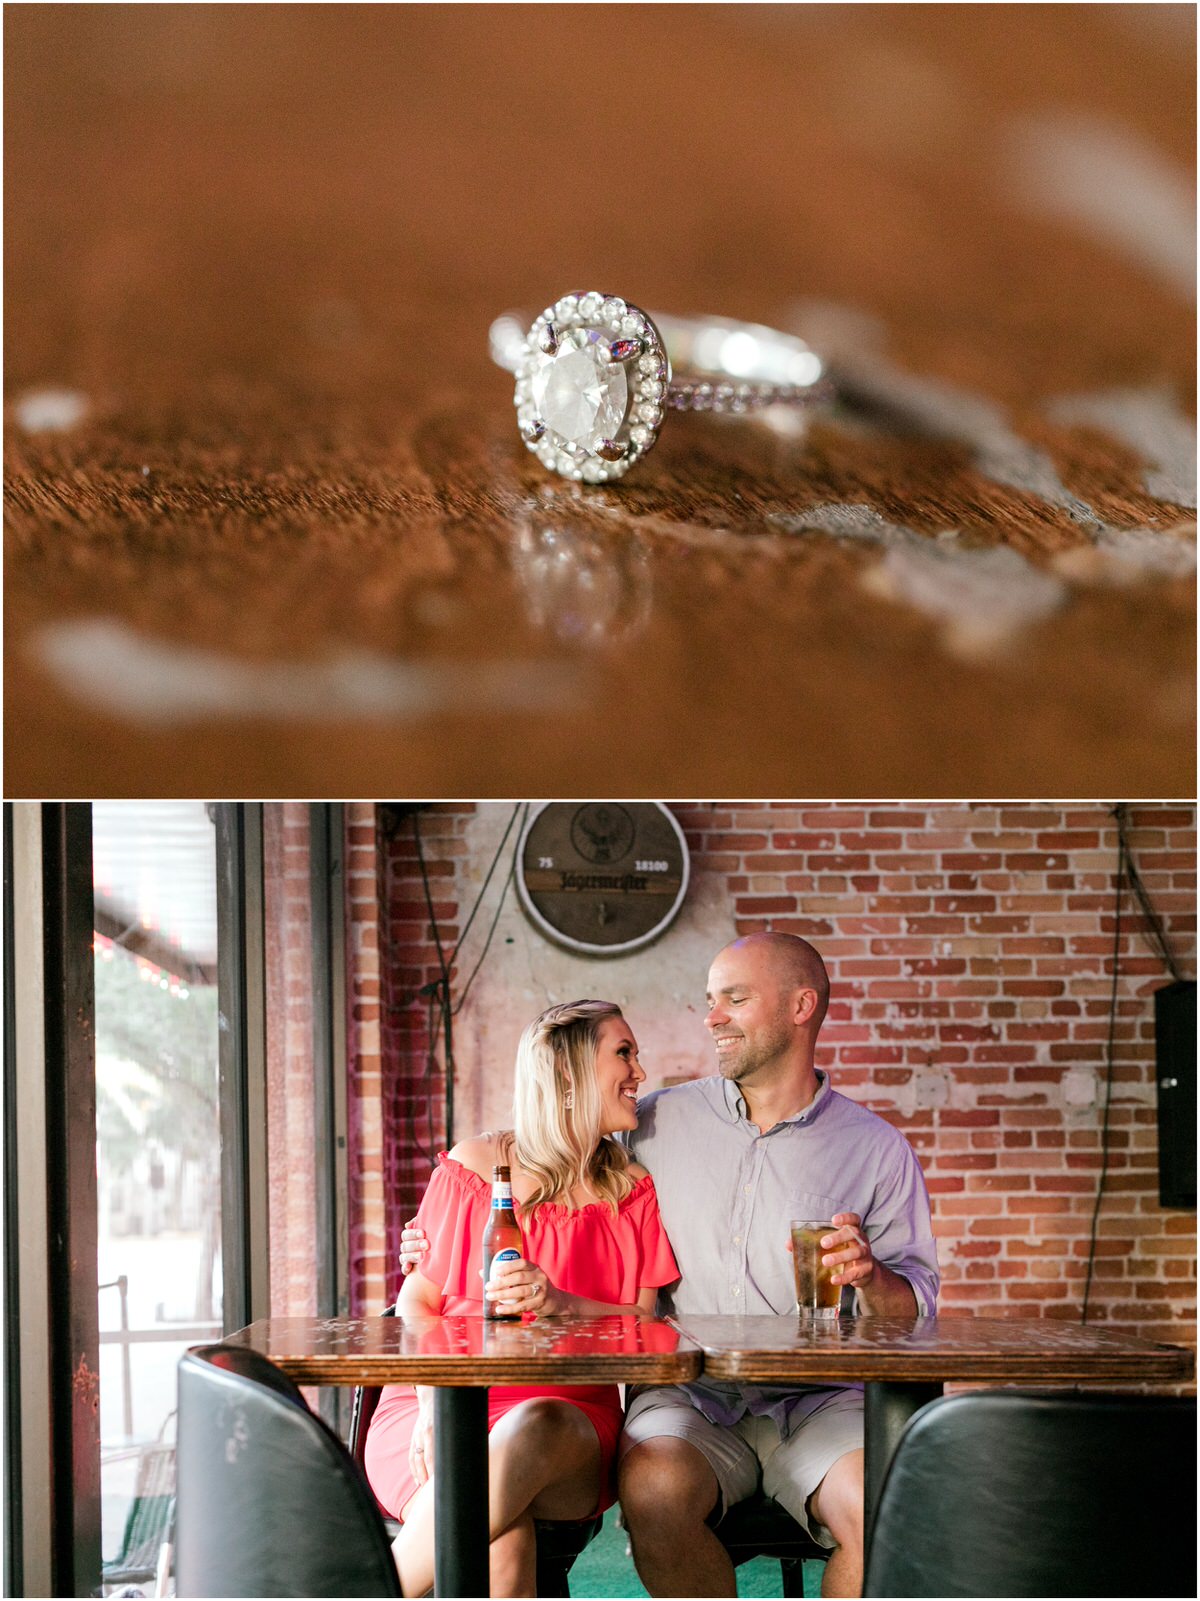 Engagement ring sitting on bar